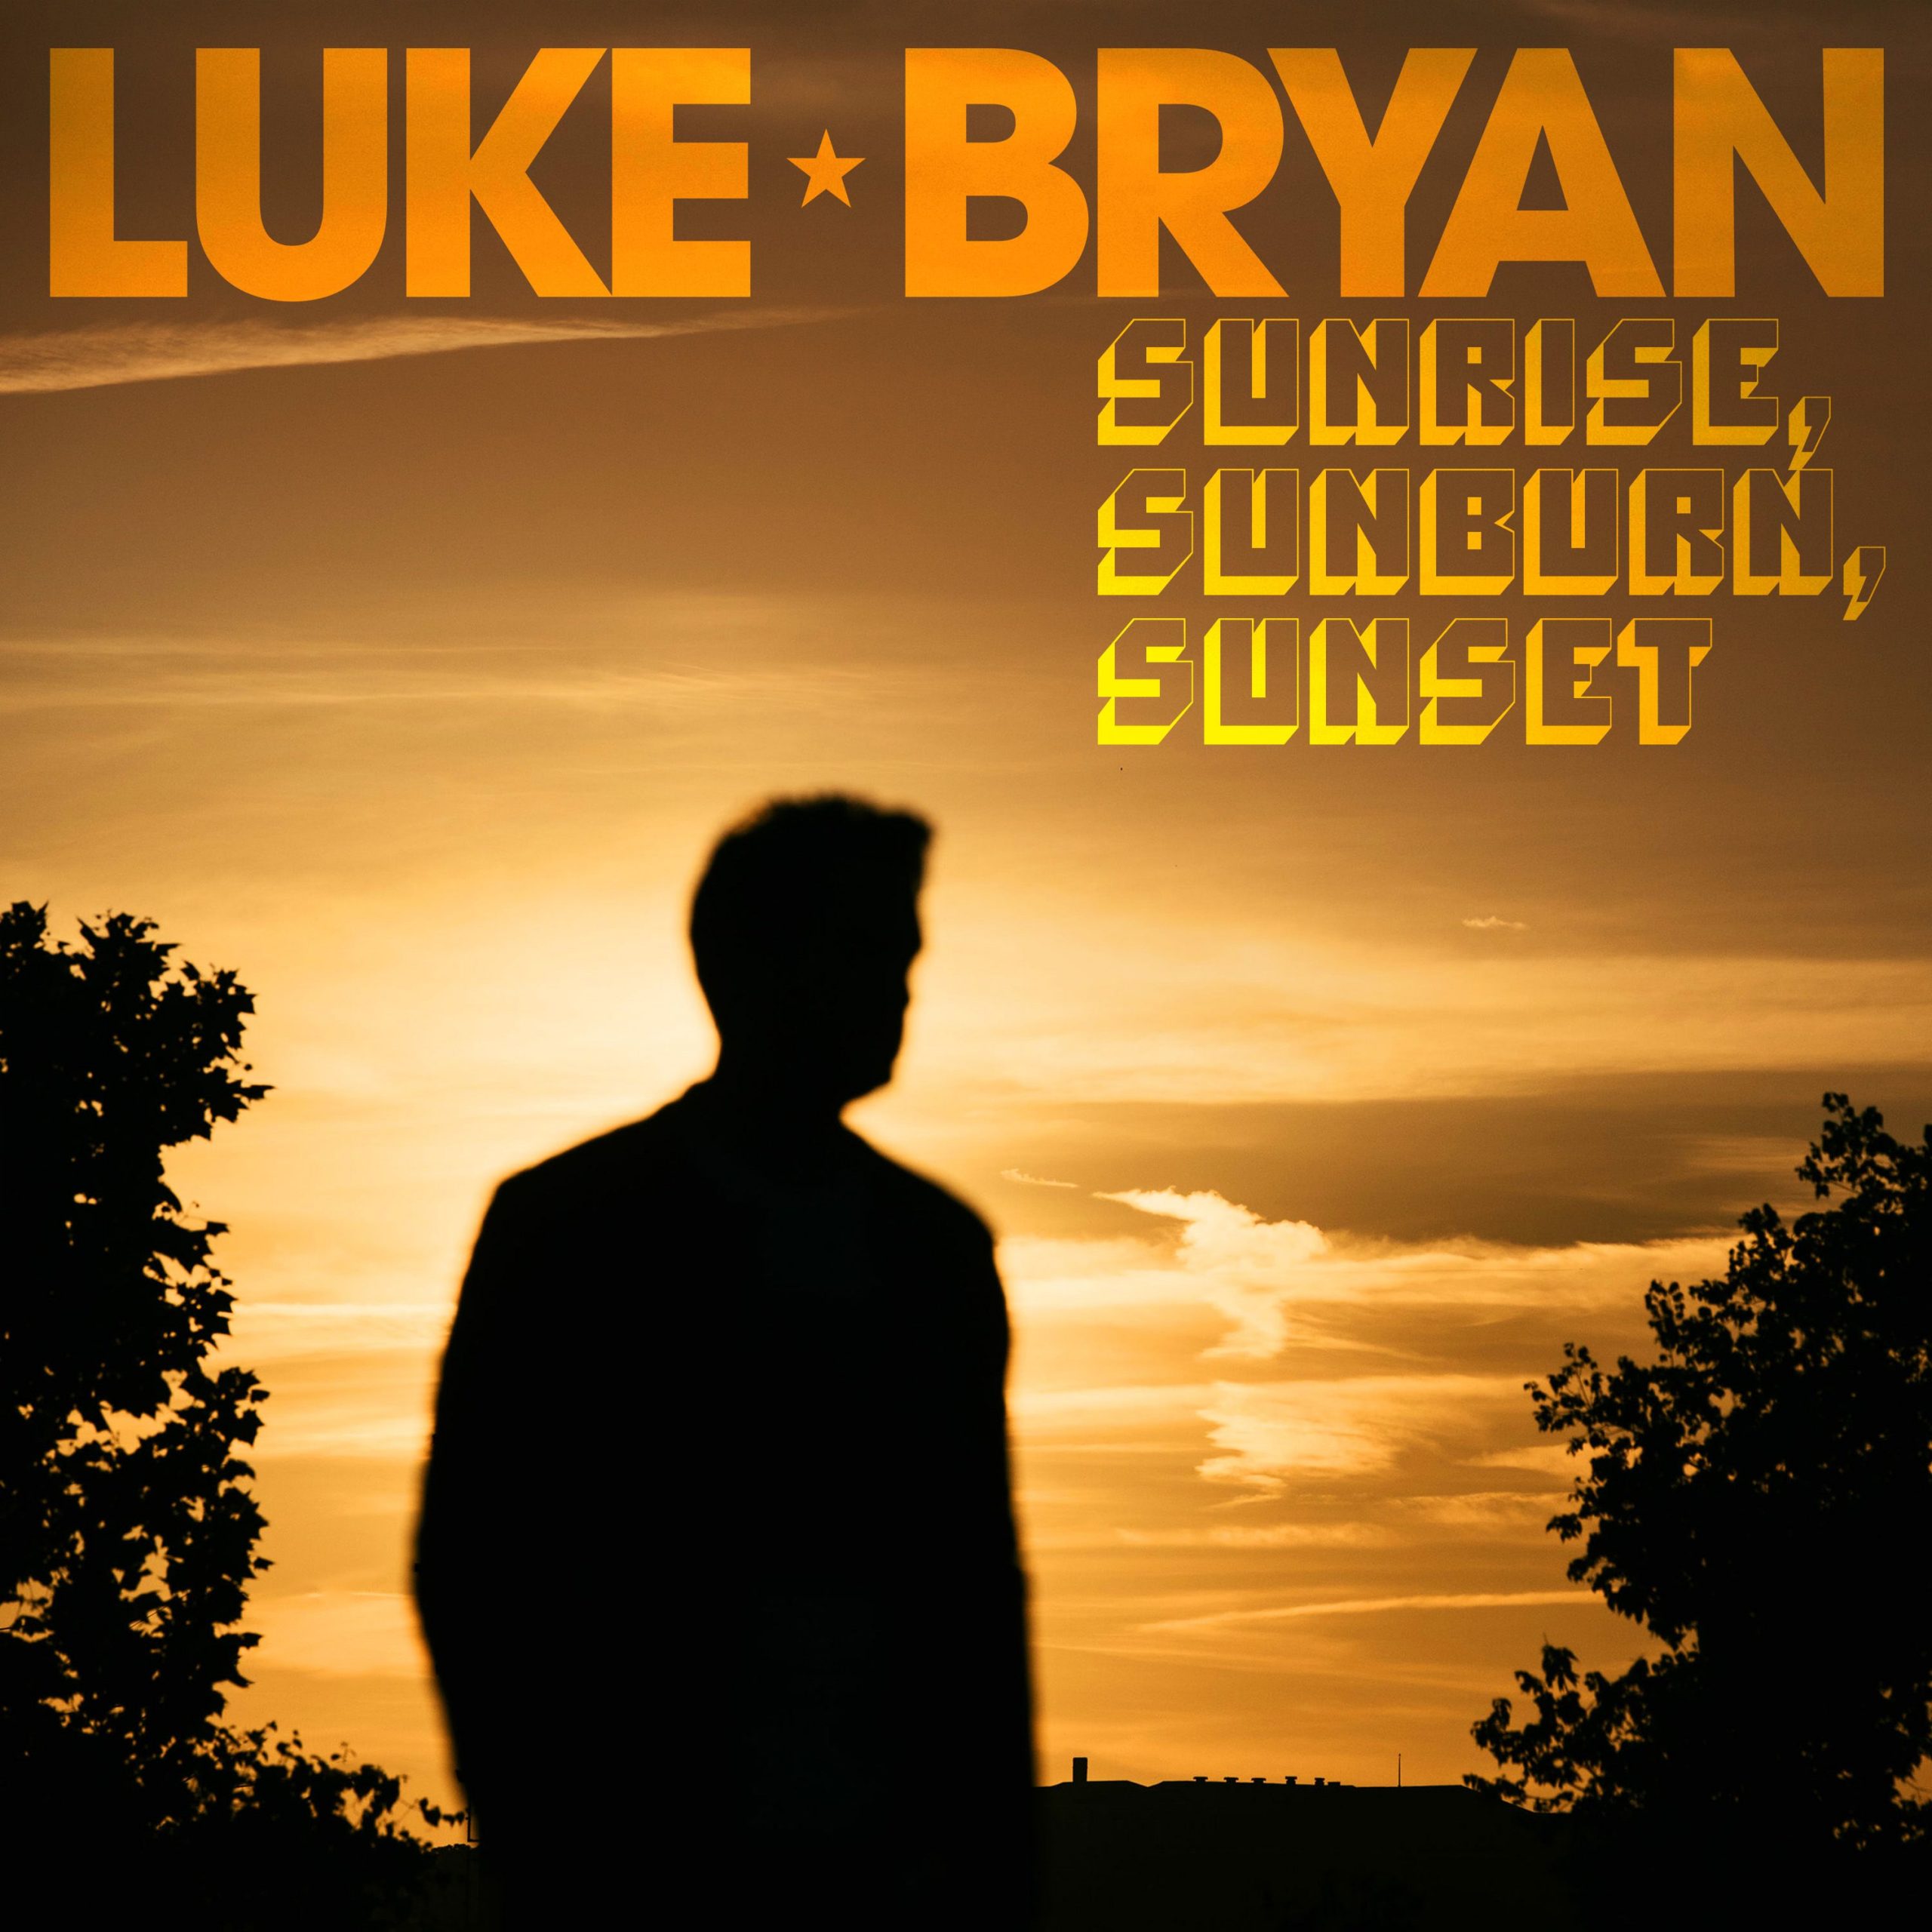 Luke Bryan Debuts New Single on American Idol Finale “Sunrise, Sunburn, Sunset”